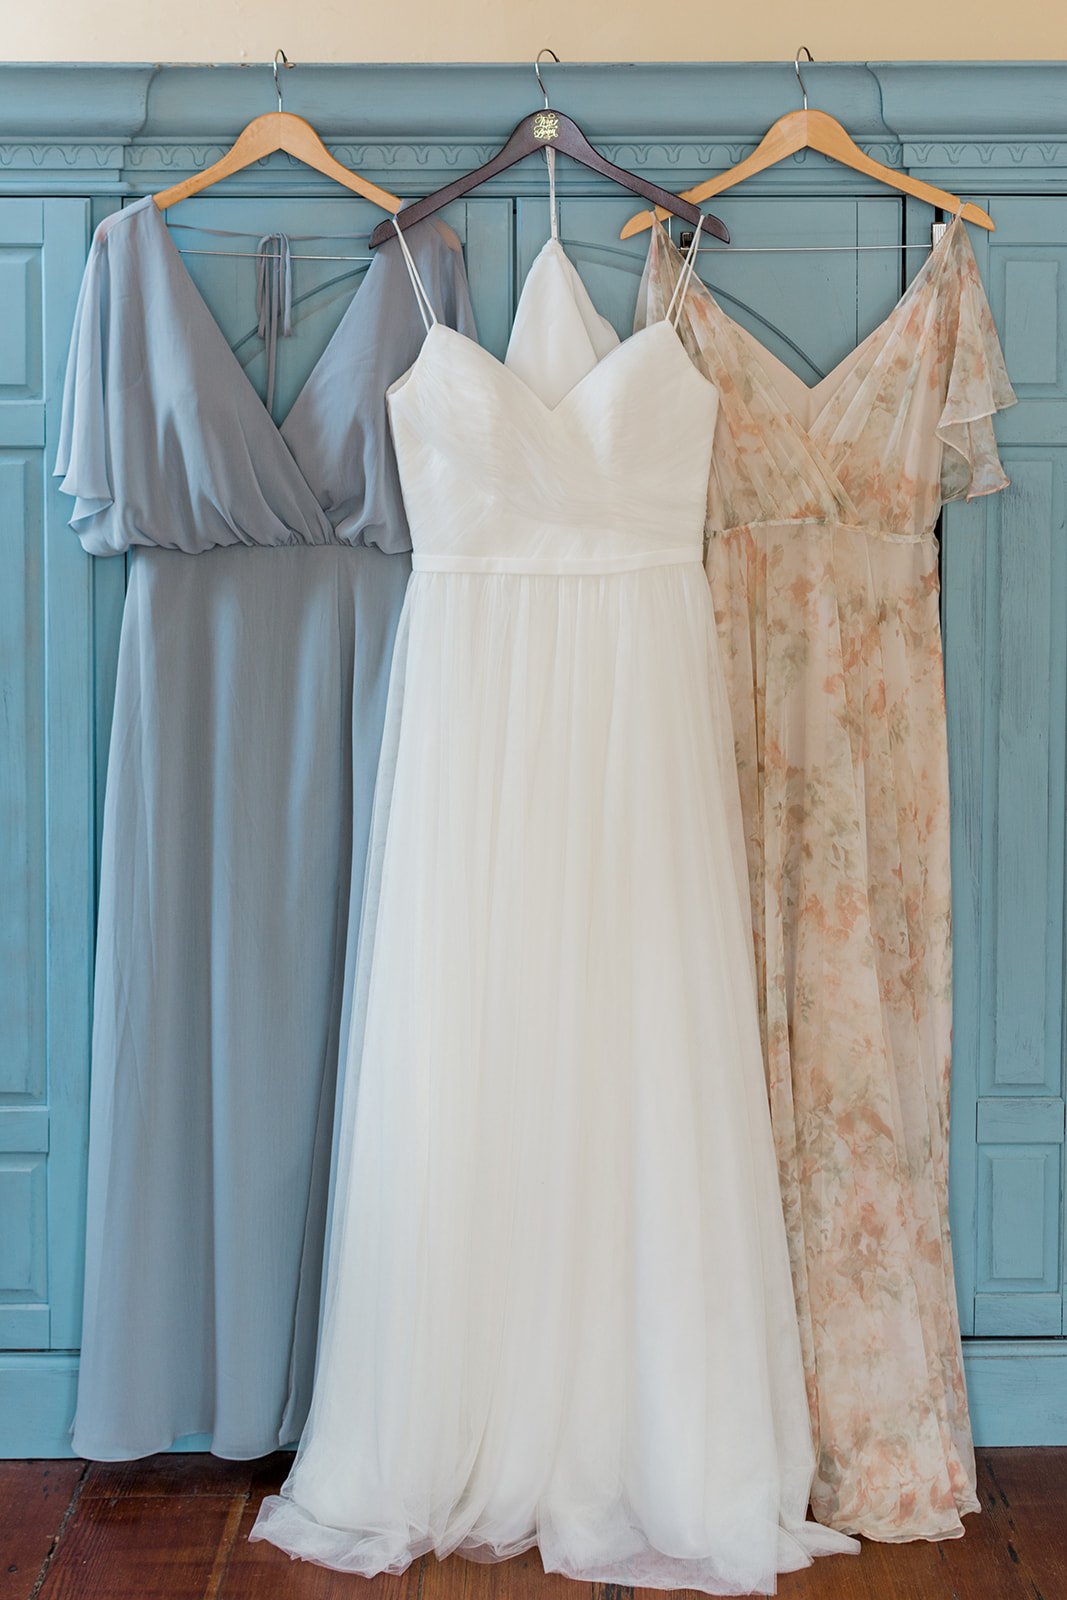 savannah-bridal-shop-ivory-and-beau-savannah-wedding-dresses-rebecca-ingram-wedding-dress-jenny-yoo-floral-print-bridesmaid-dress-charleston-styled-shoot-romantic-wedding-dresses.jpg